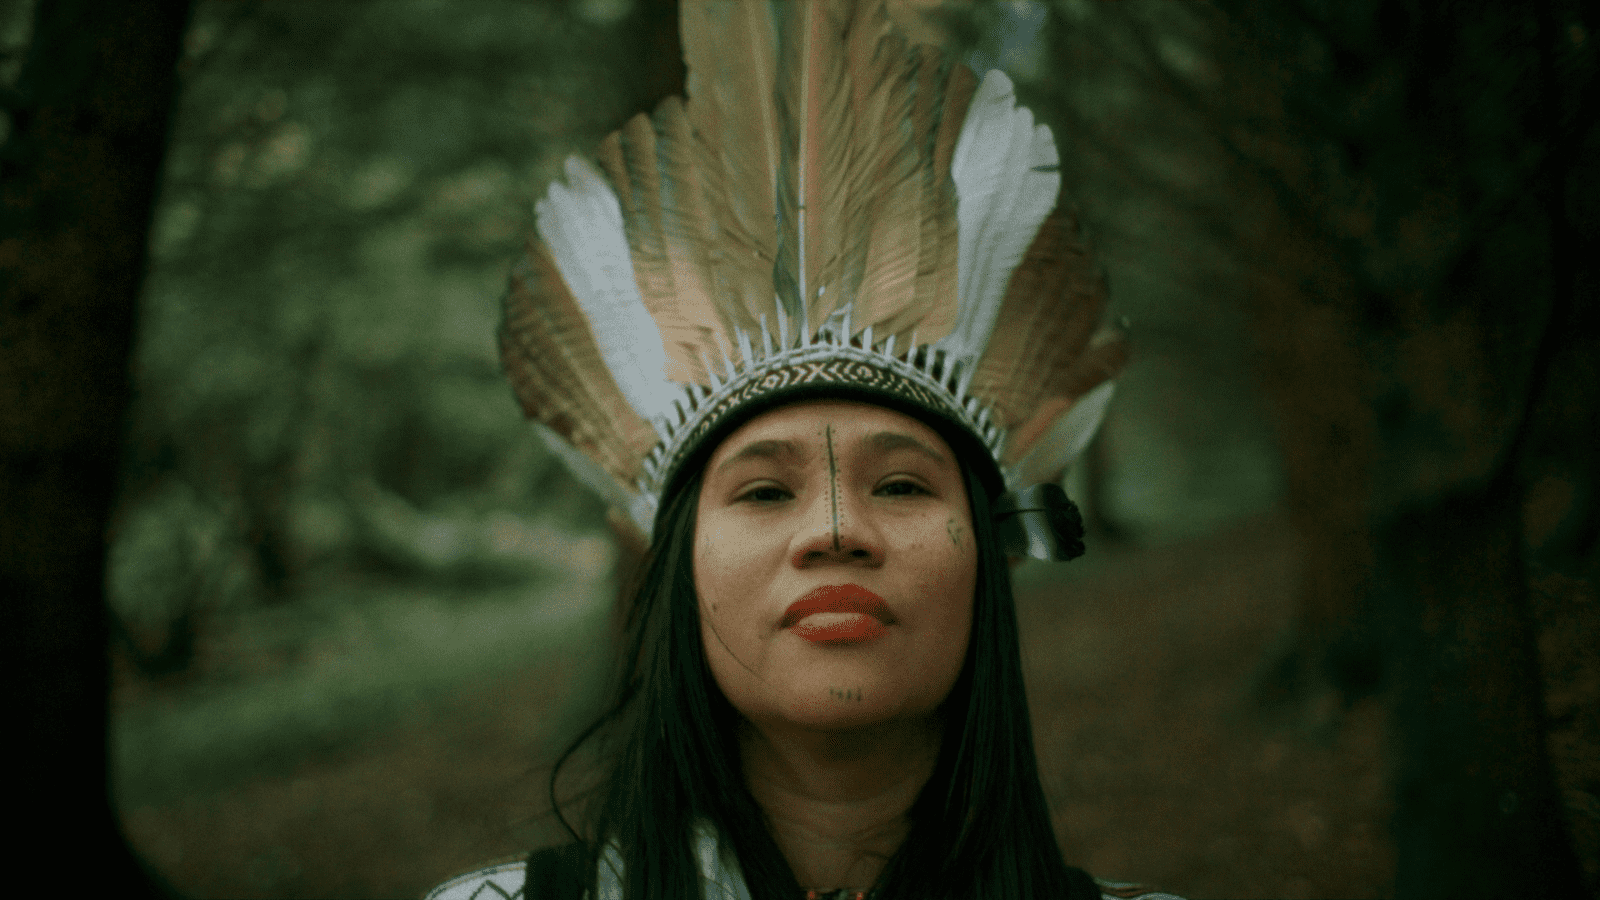 An indigenous person wearing a headdress